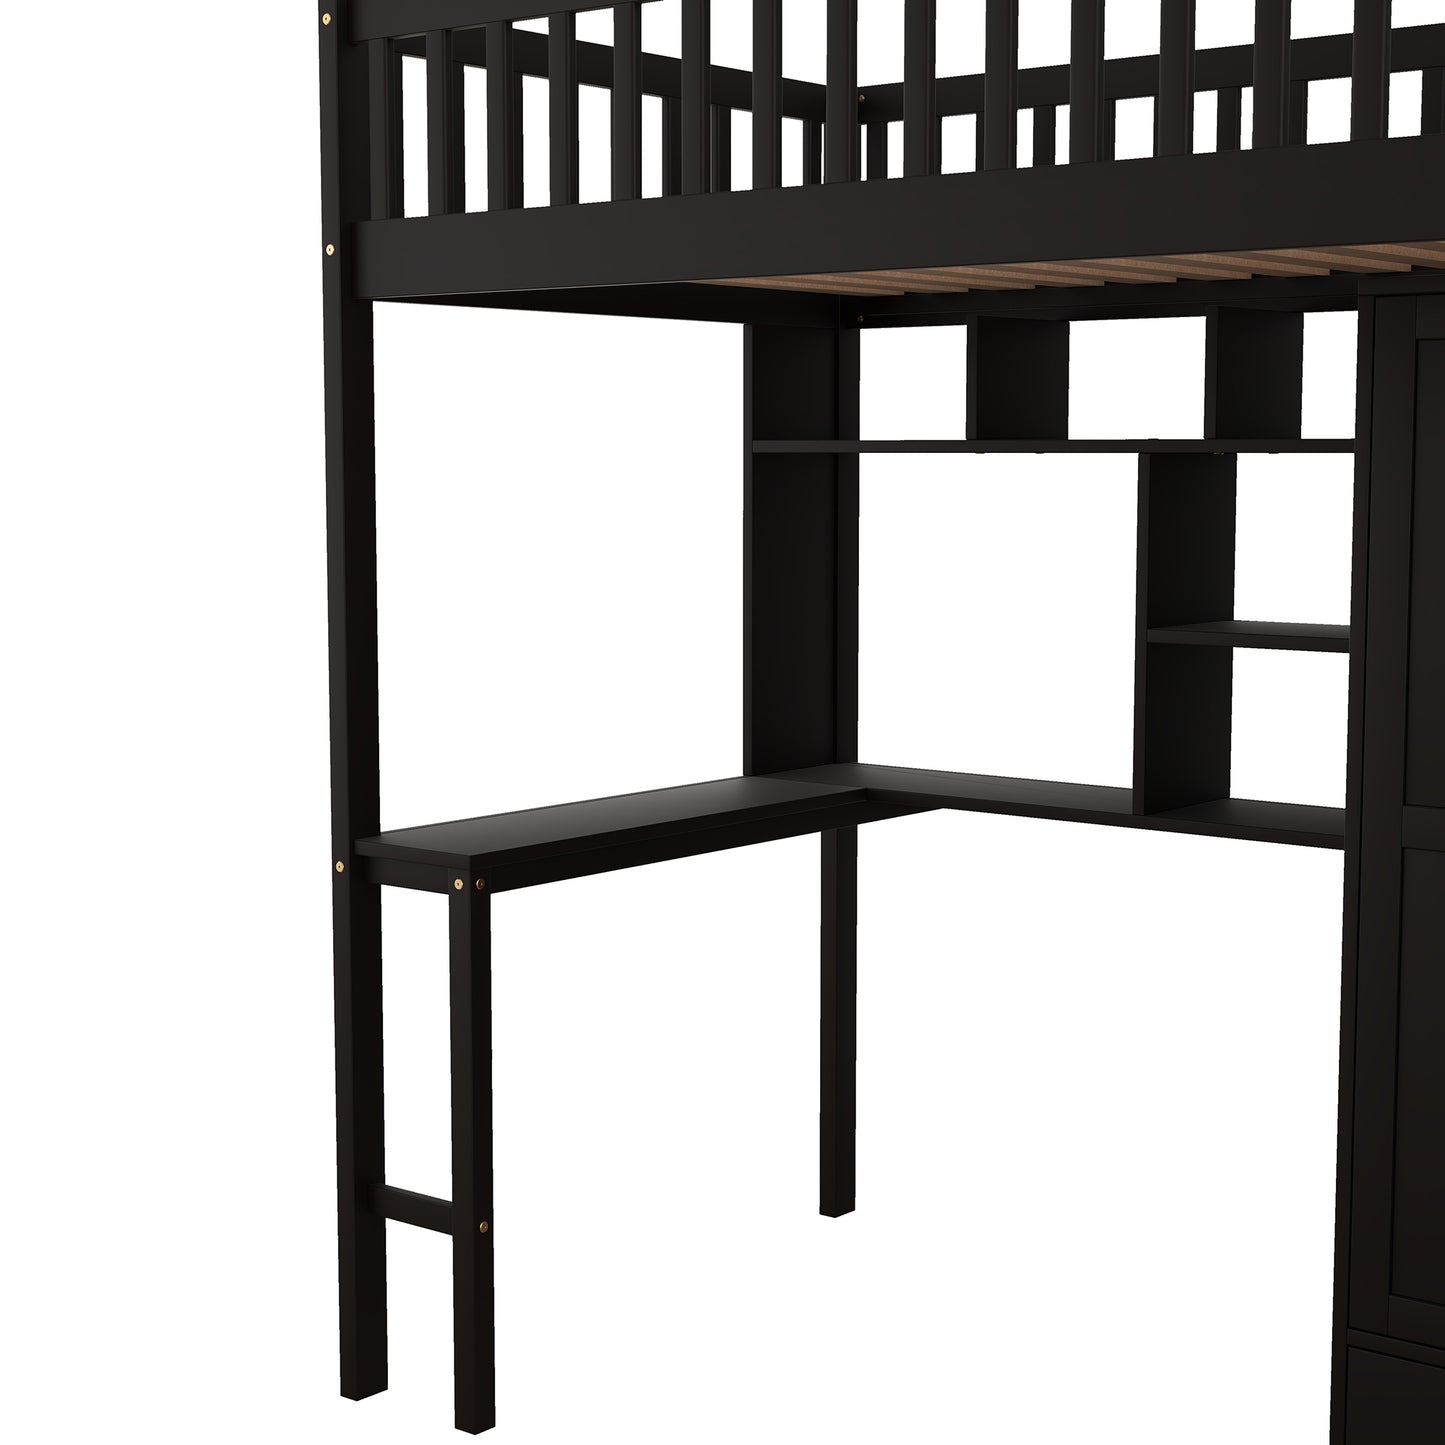 Twin size Loft Bed with Bookshelf,Drawers,Desk,and Wardrobe-Espresso